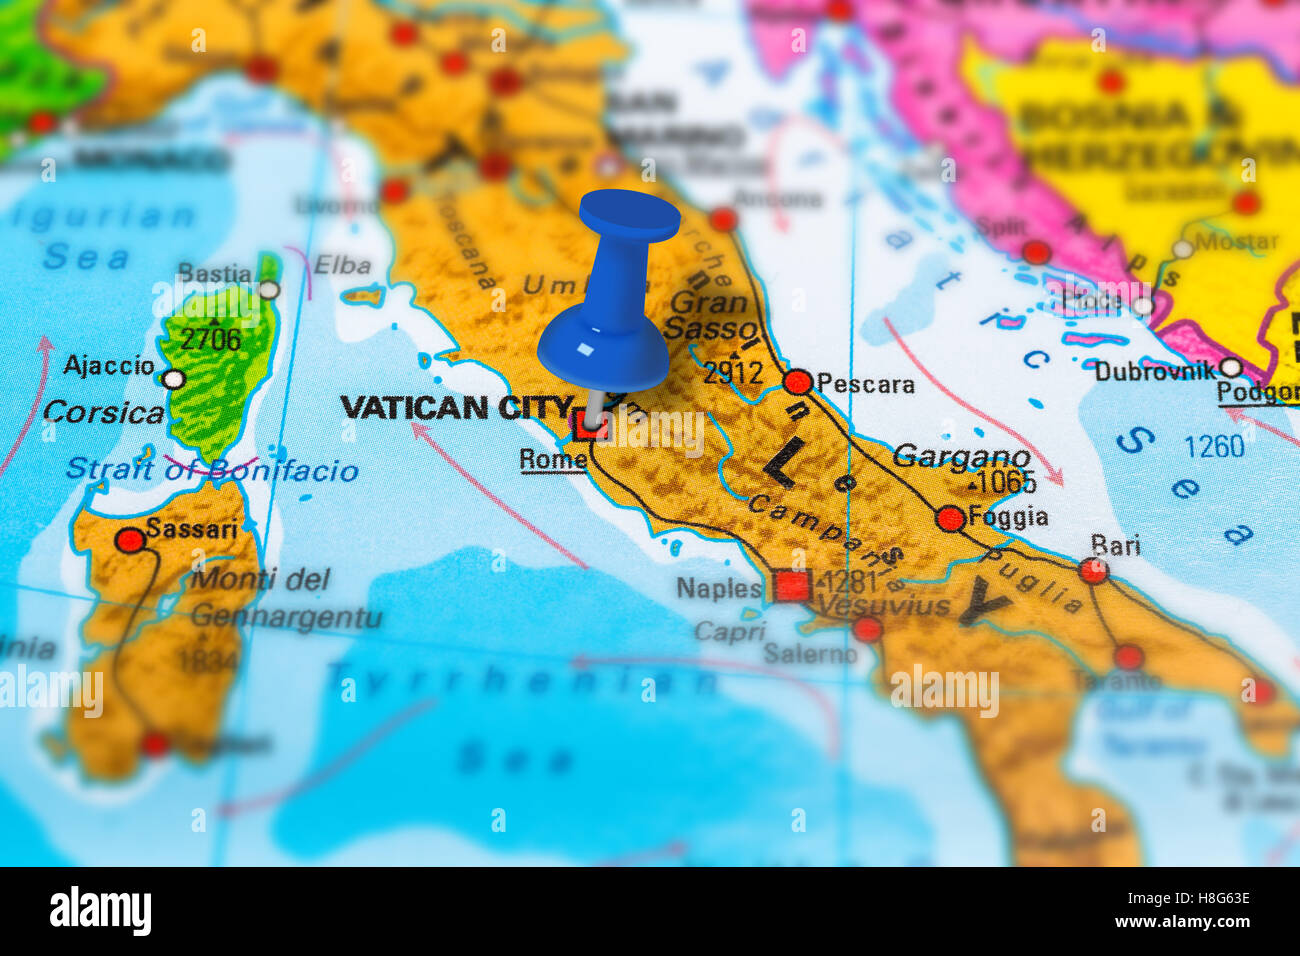 Vatican City Italy map Stock Photo